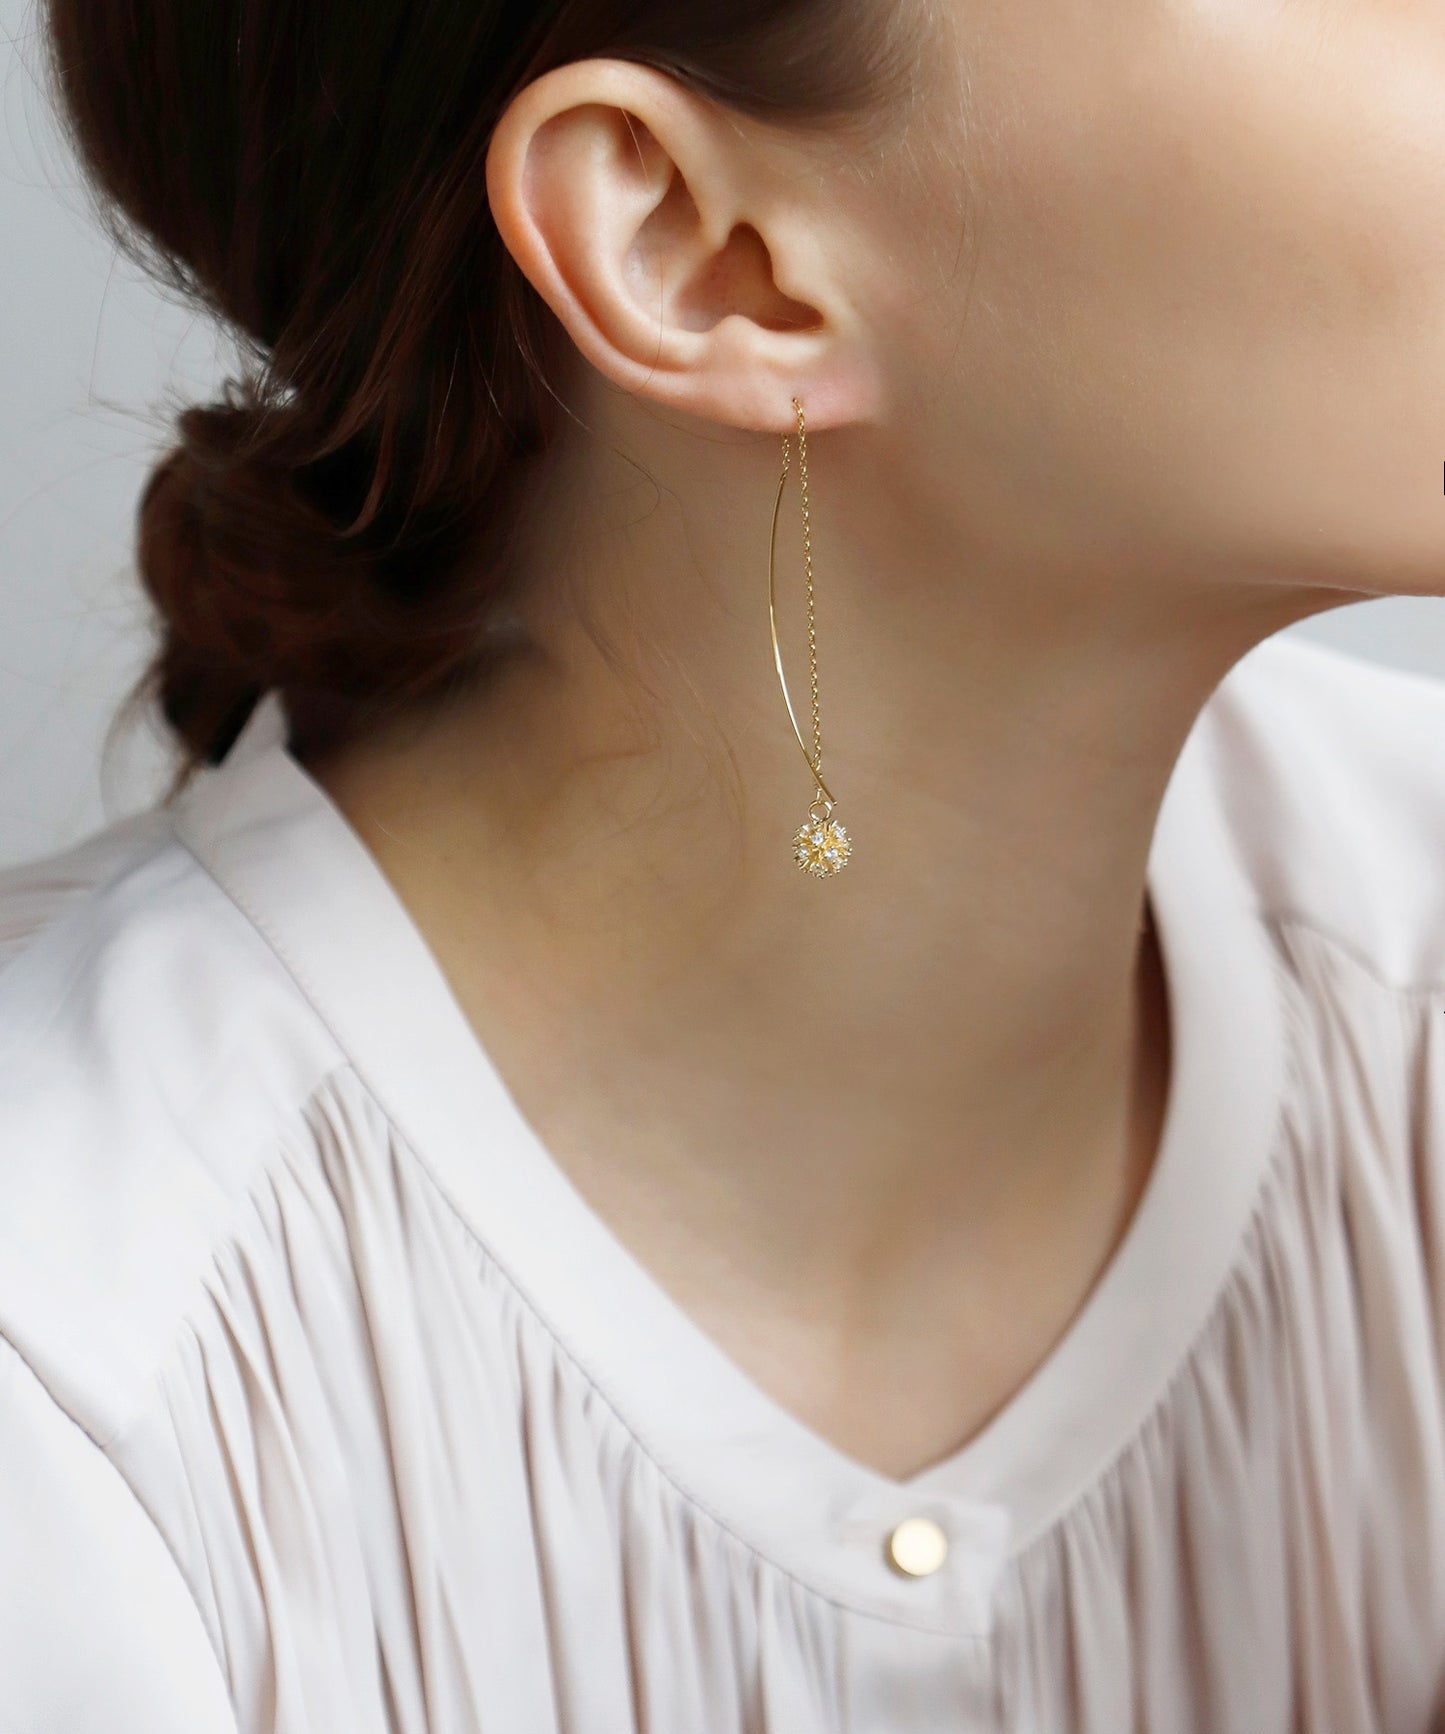 Bijoux Ball American Earrings [Basic]